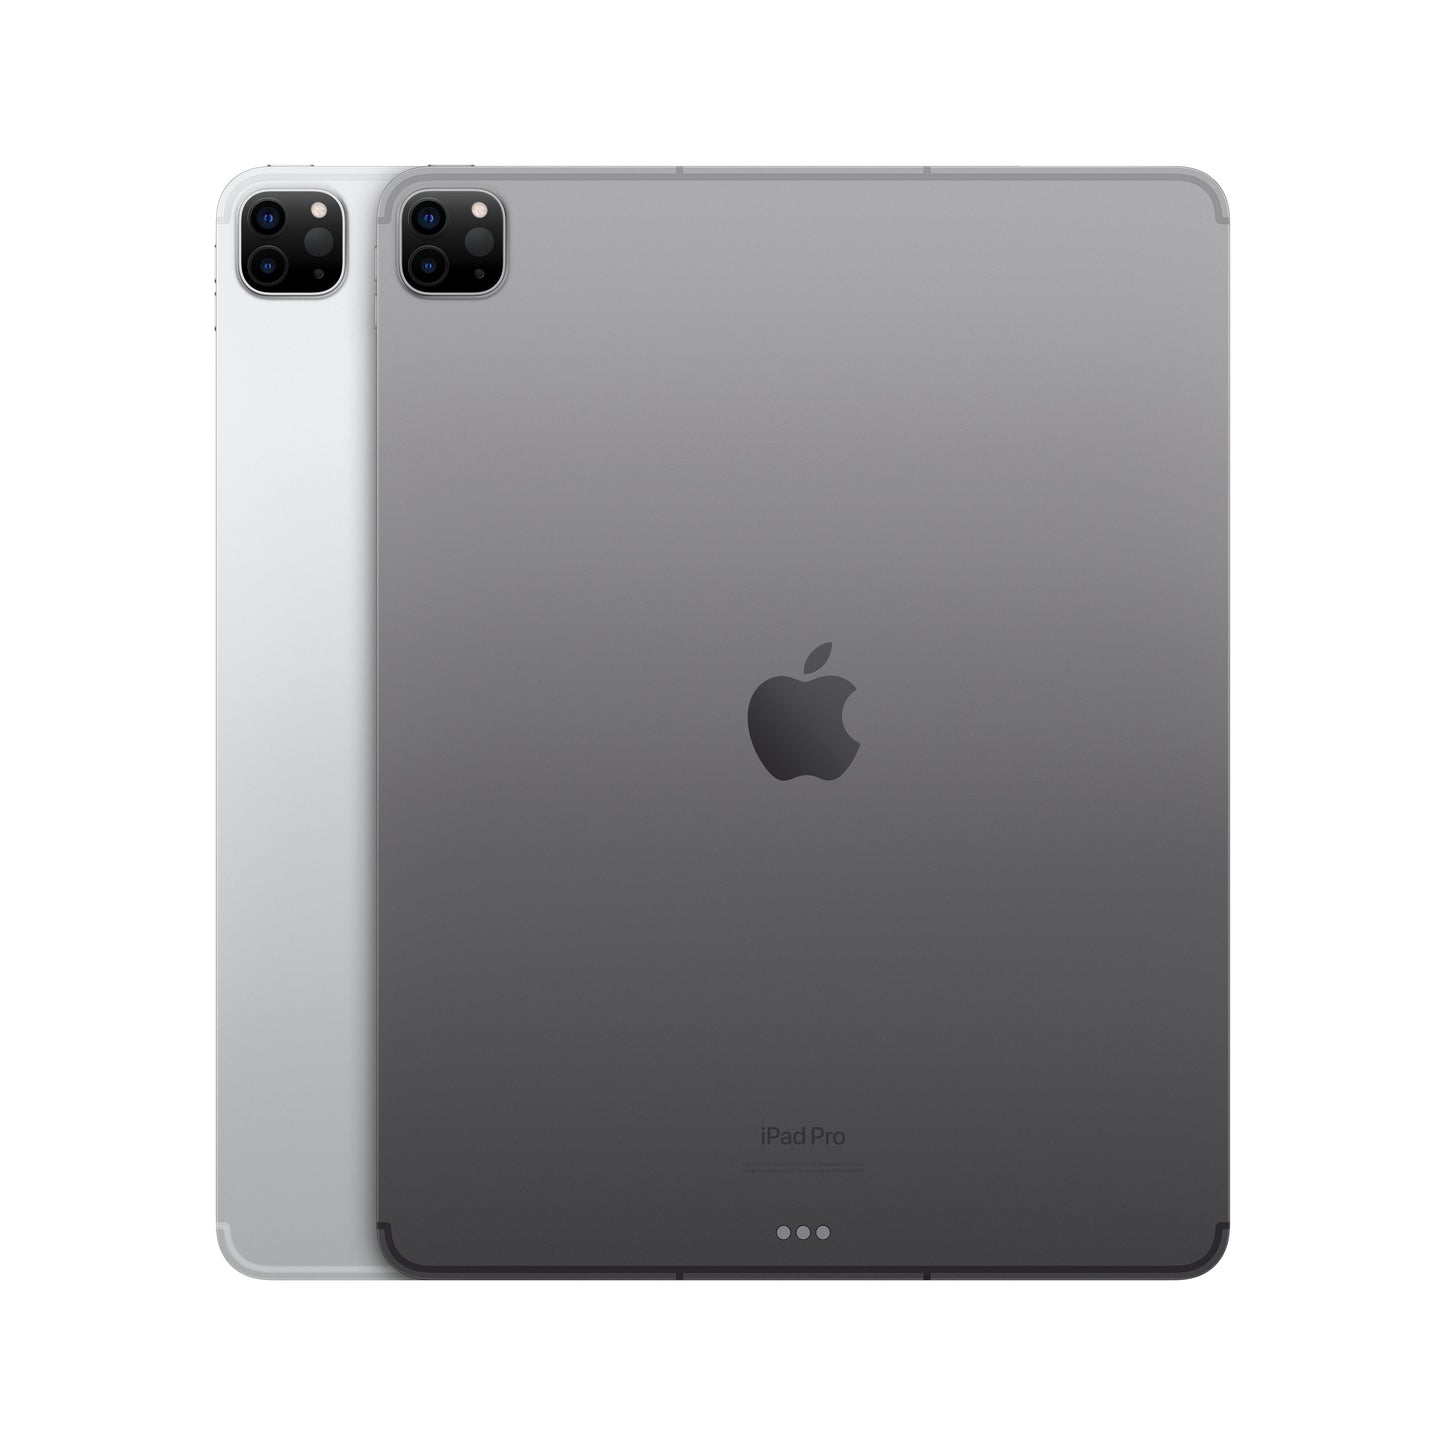 2022 12.9-inch iPad Pro Wi-Fi + Cellular 256GB - Space Gray (6th generation)